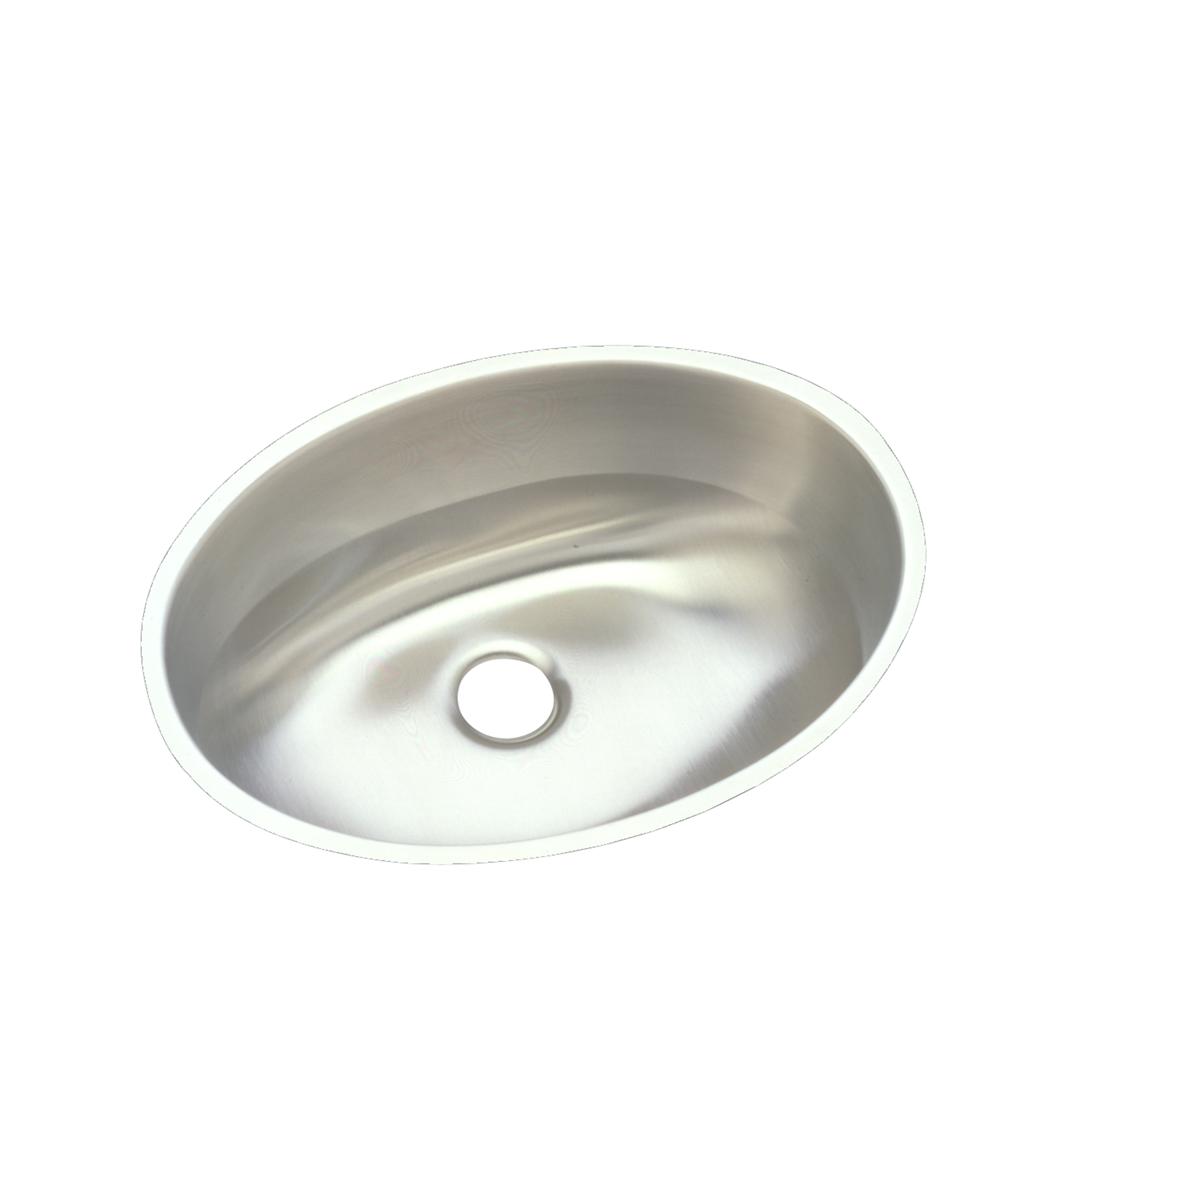 Elkay  Asana Stainless Steel Undermount Bathroom Sink 1272556